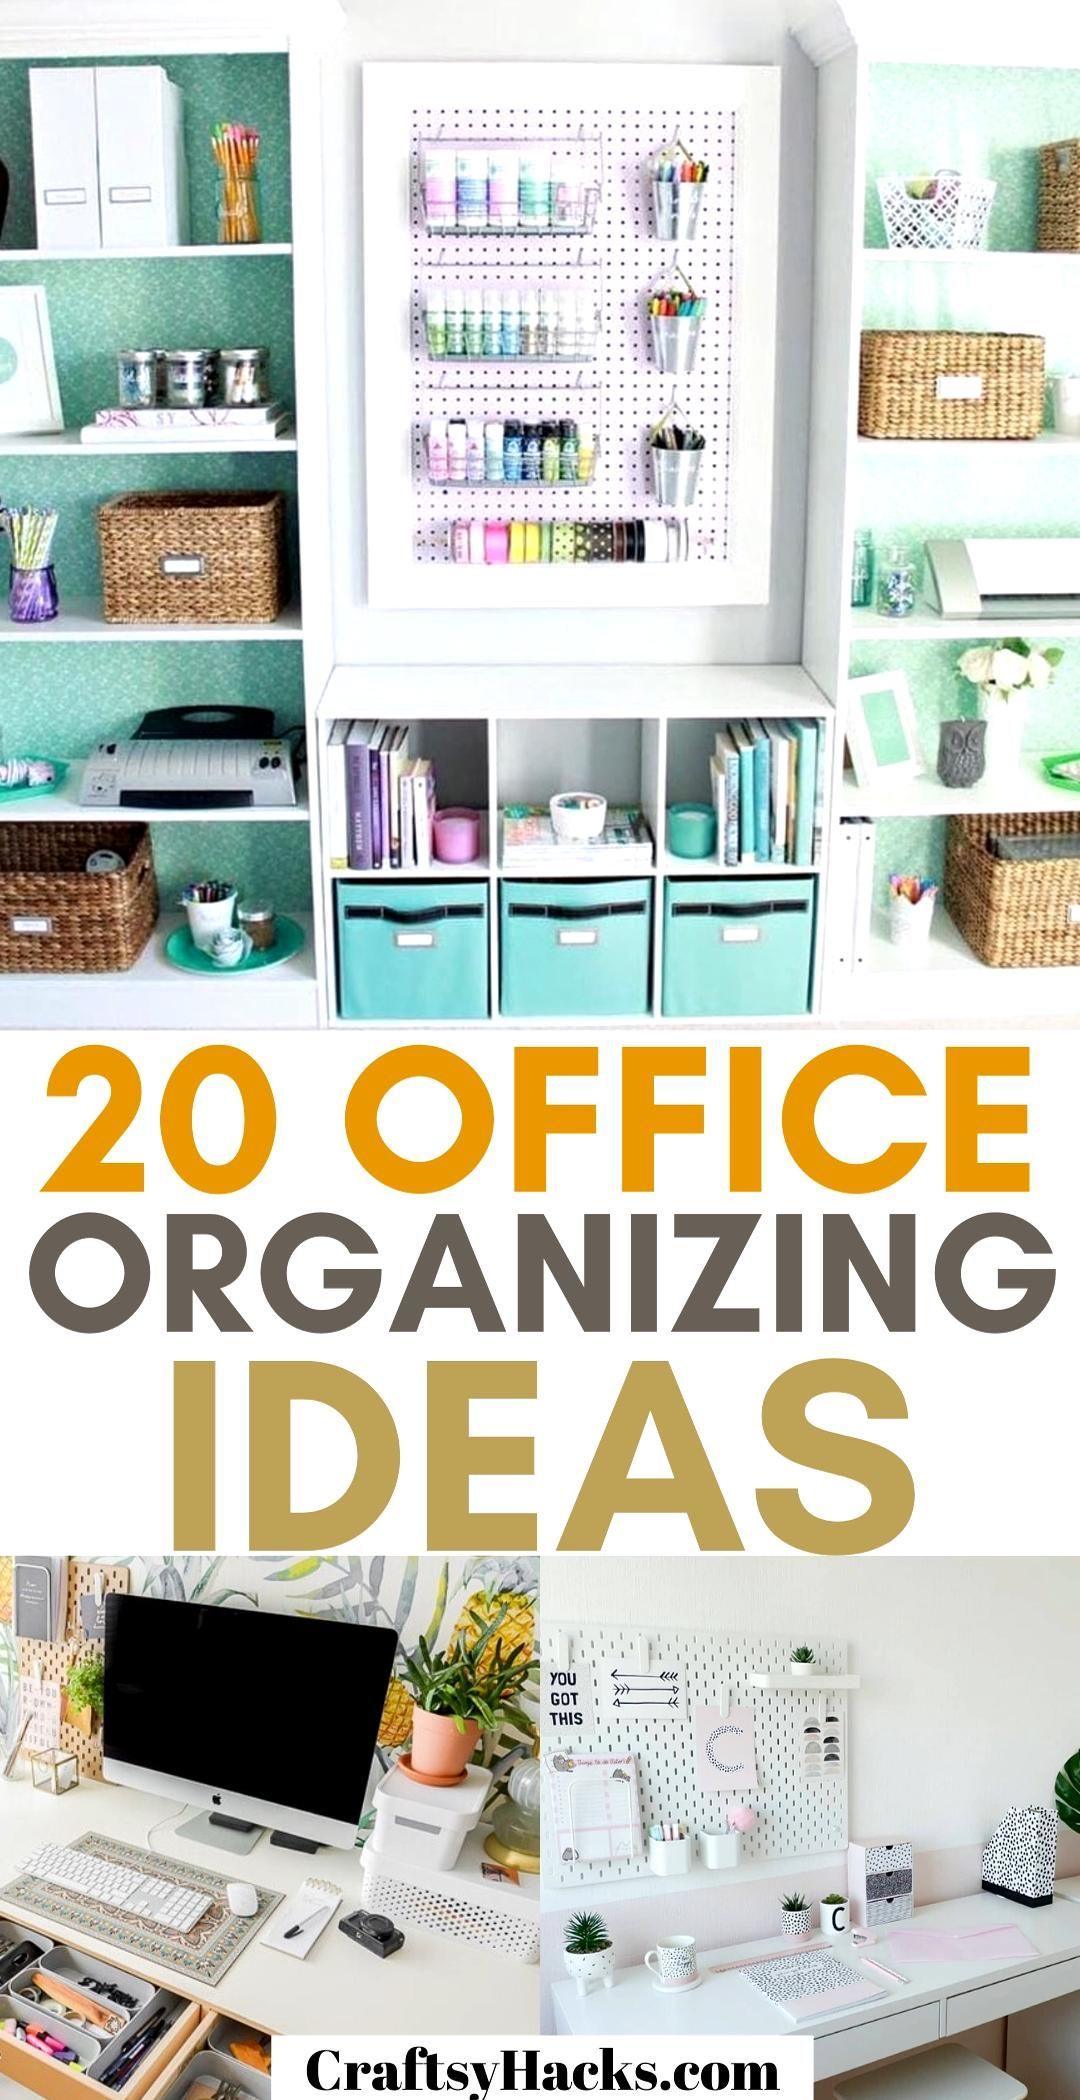 20 Office Organizing Ideas - 20 Office Organizing Ideas -   17 diy Room hacks ideas